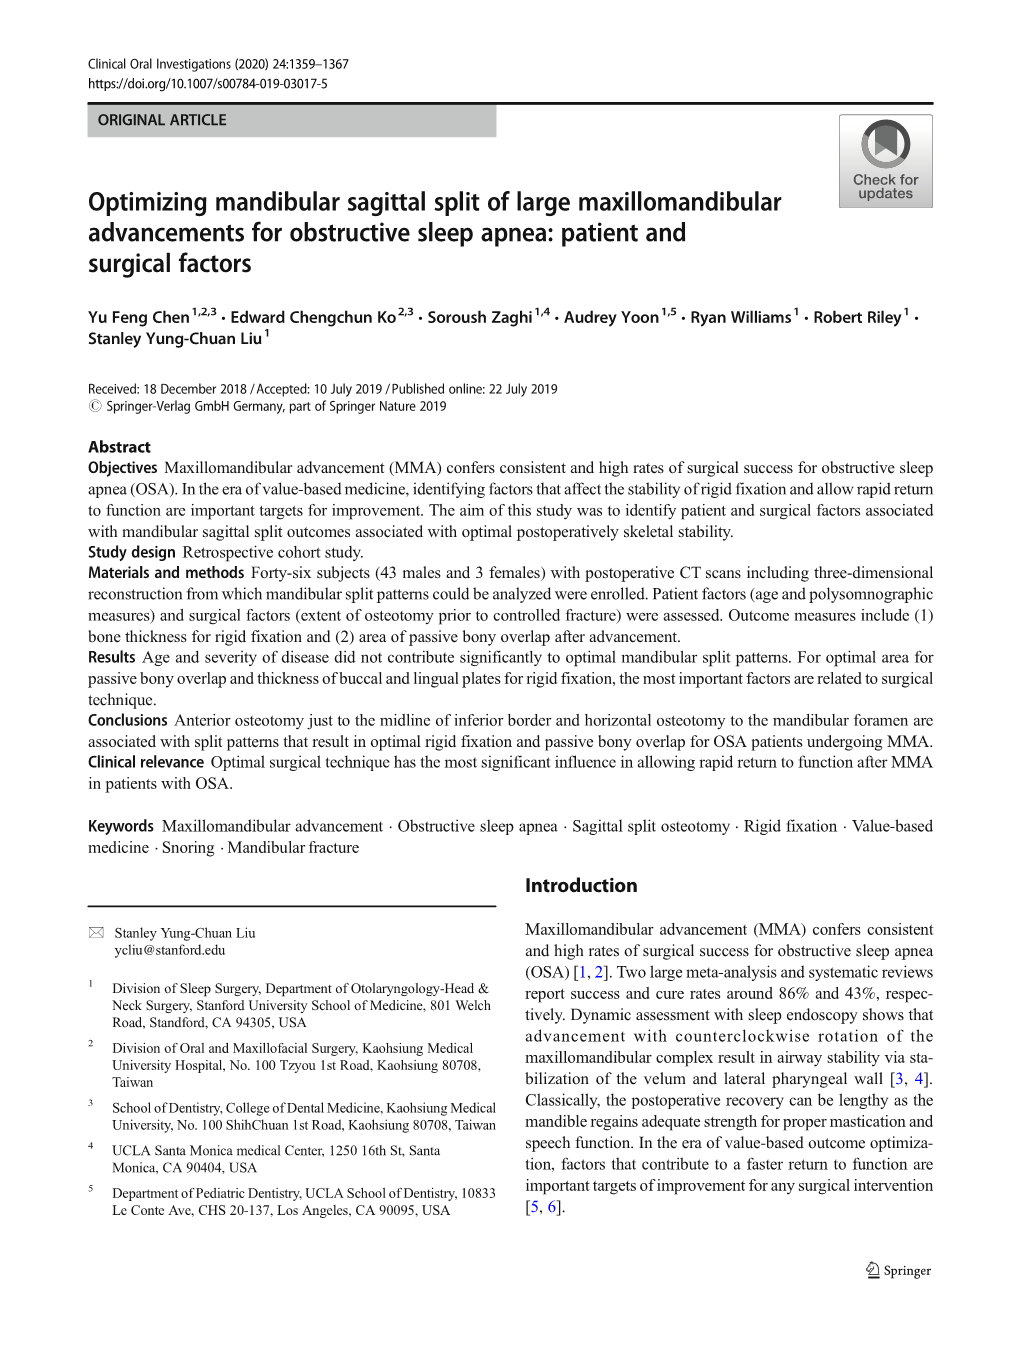 Optimizing Mandibular Sagittal Split of Large Maxillomandibular Advancements for Obstructive Sleep Apnea: Patient and Surgical Factors